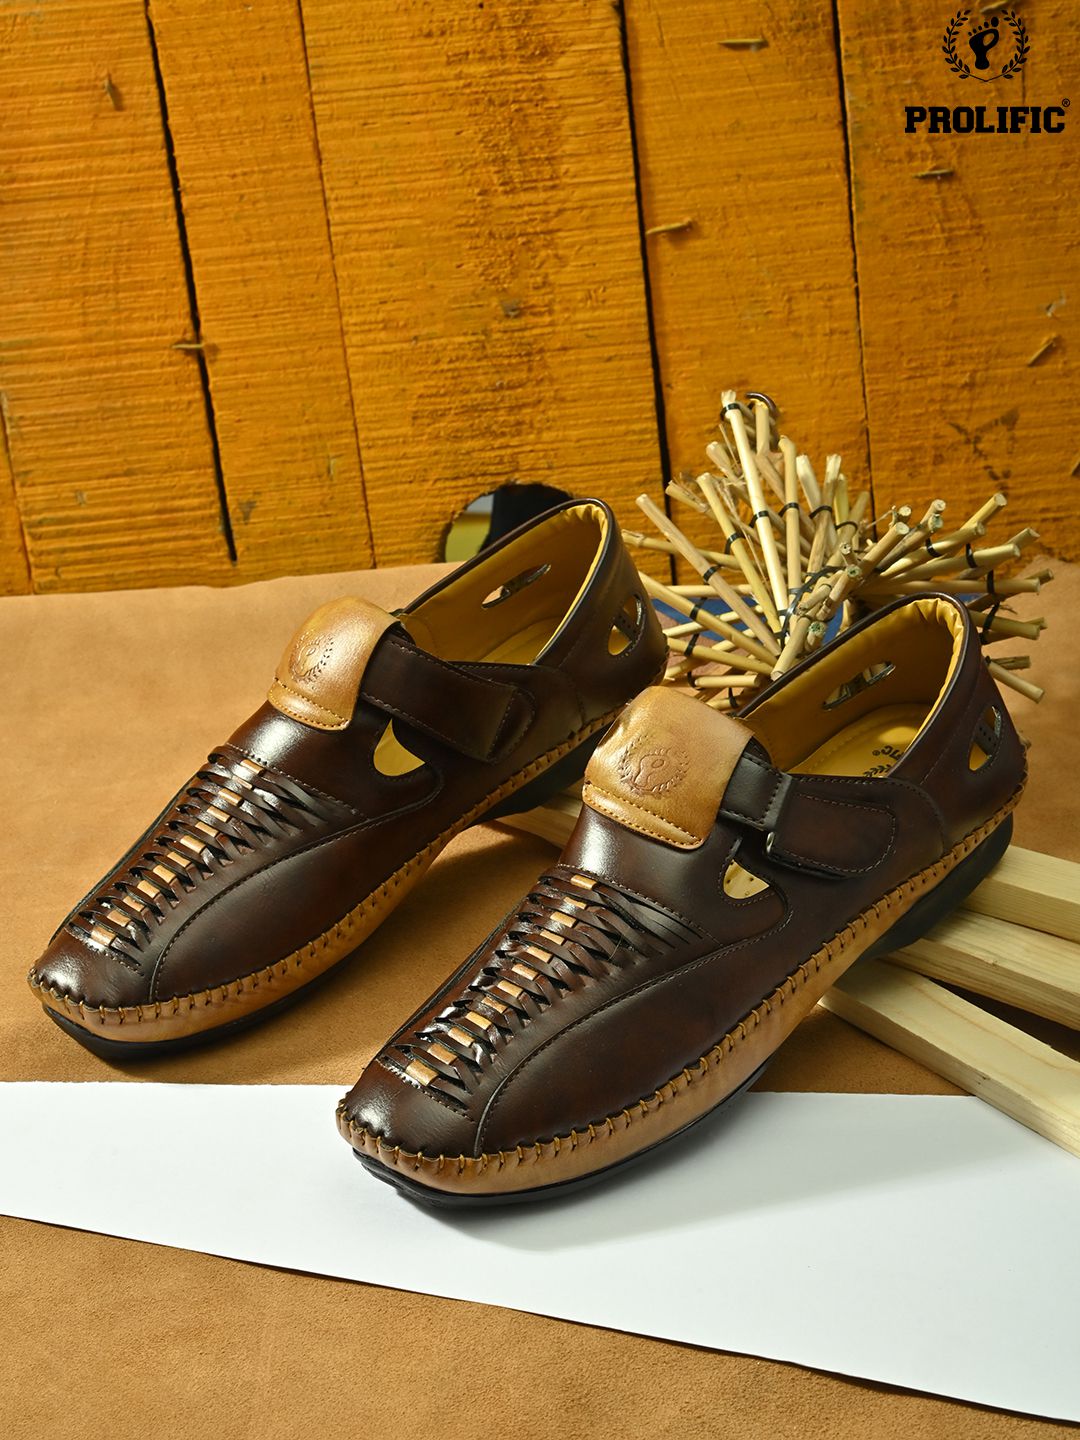     			Prolific - Brown  Men's Sandals